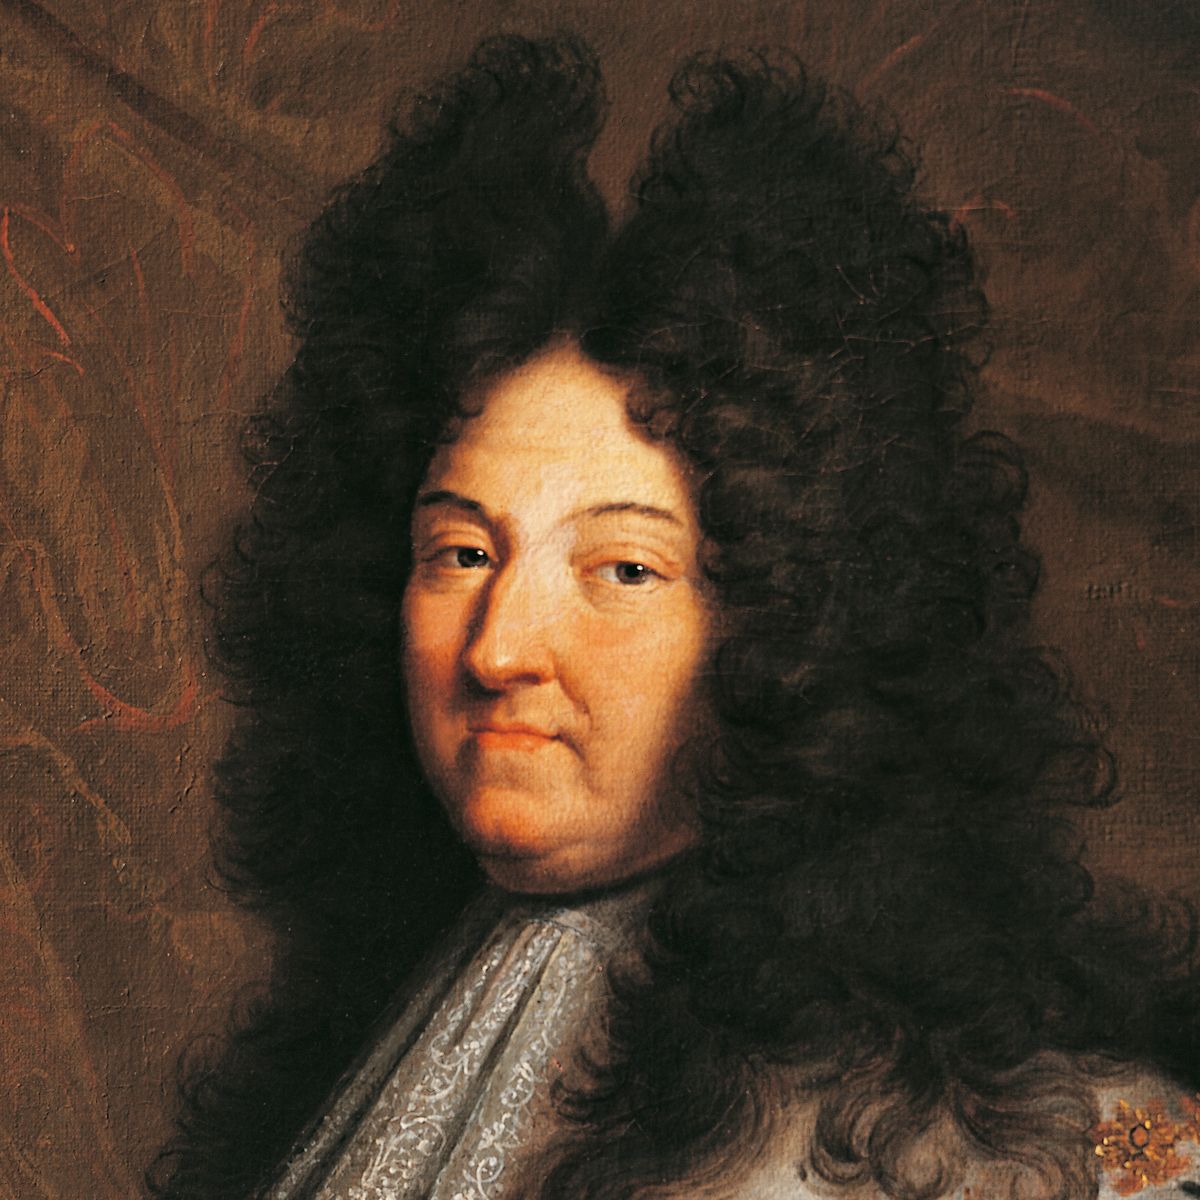 Biography of King Louis XIV, France's Sun King